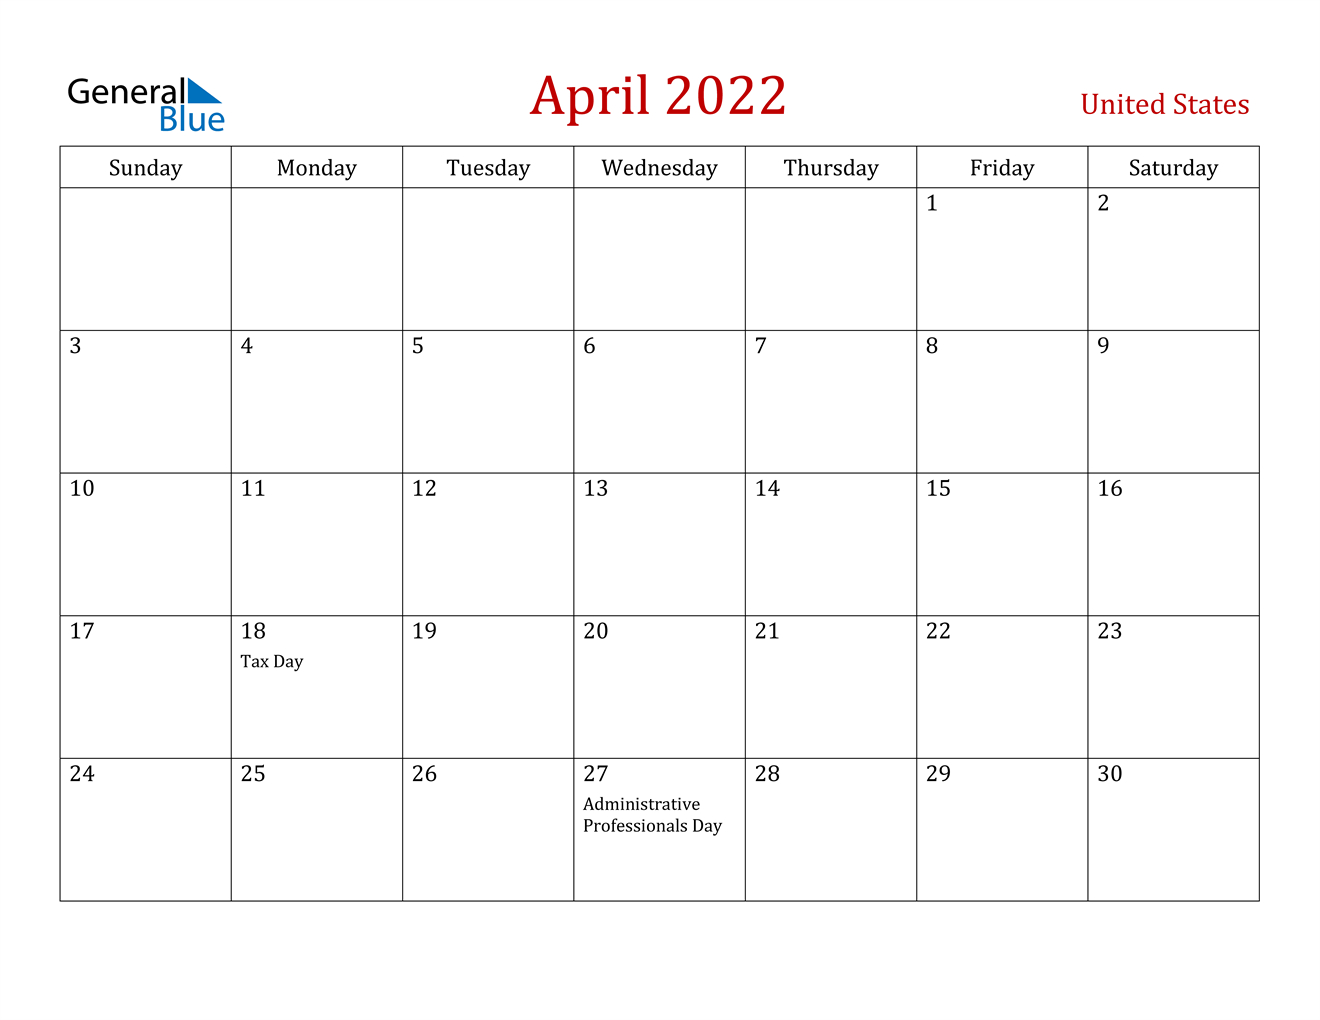 April 2022 Calendar - United States